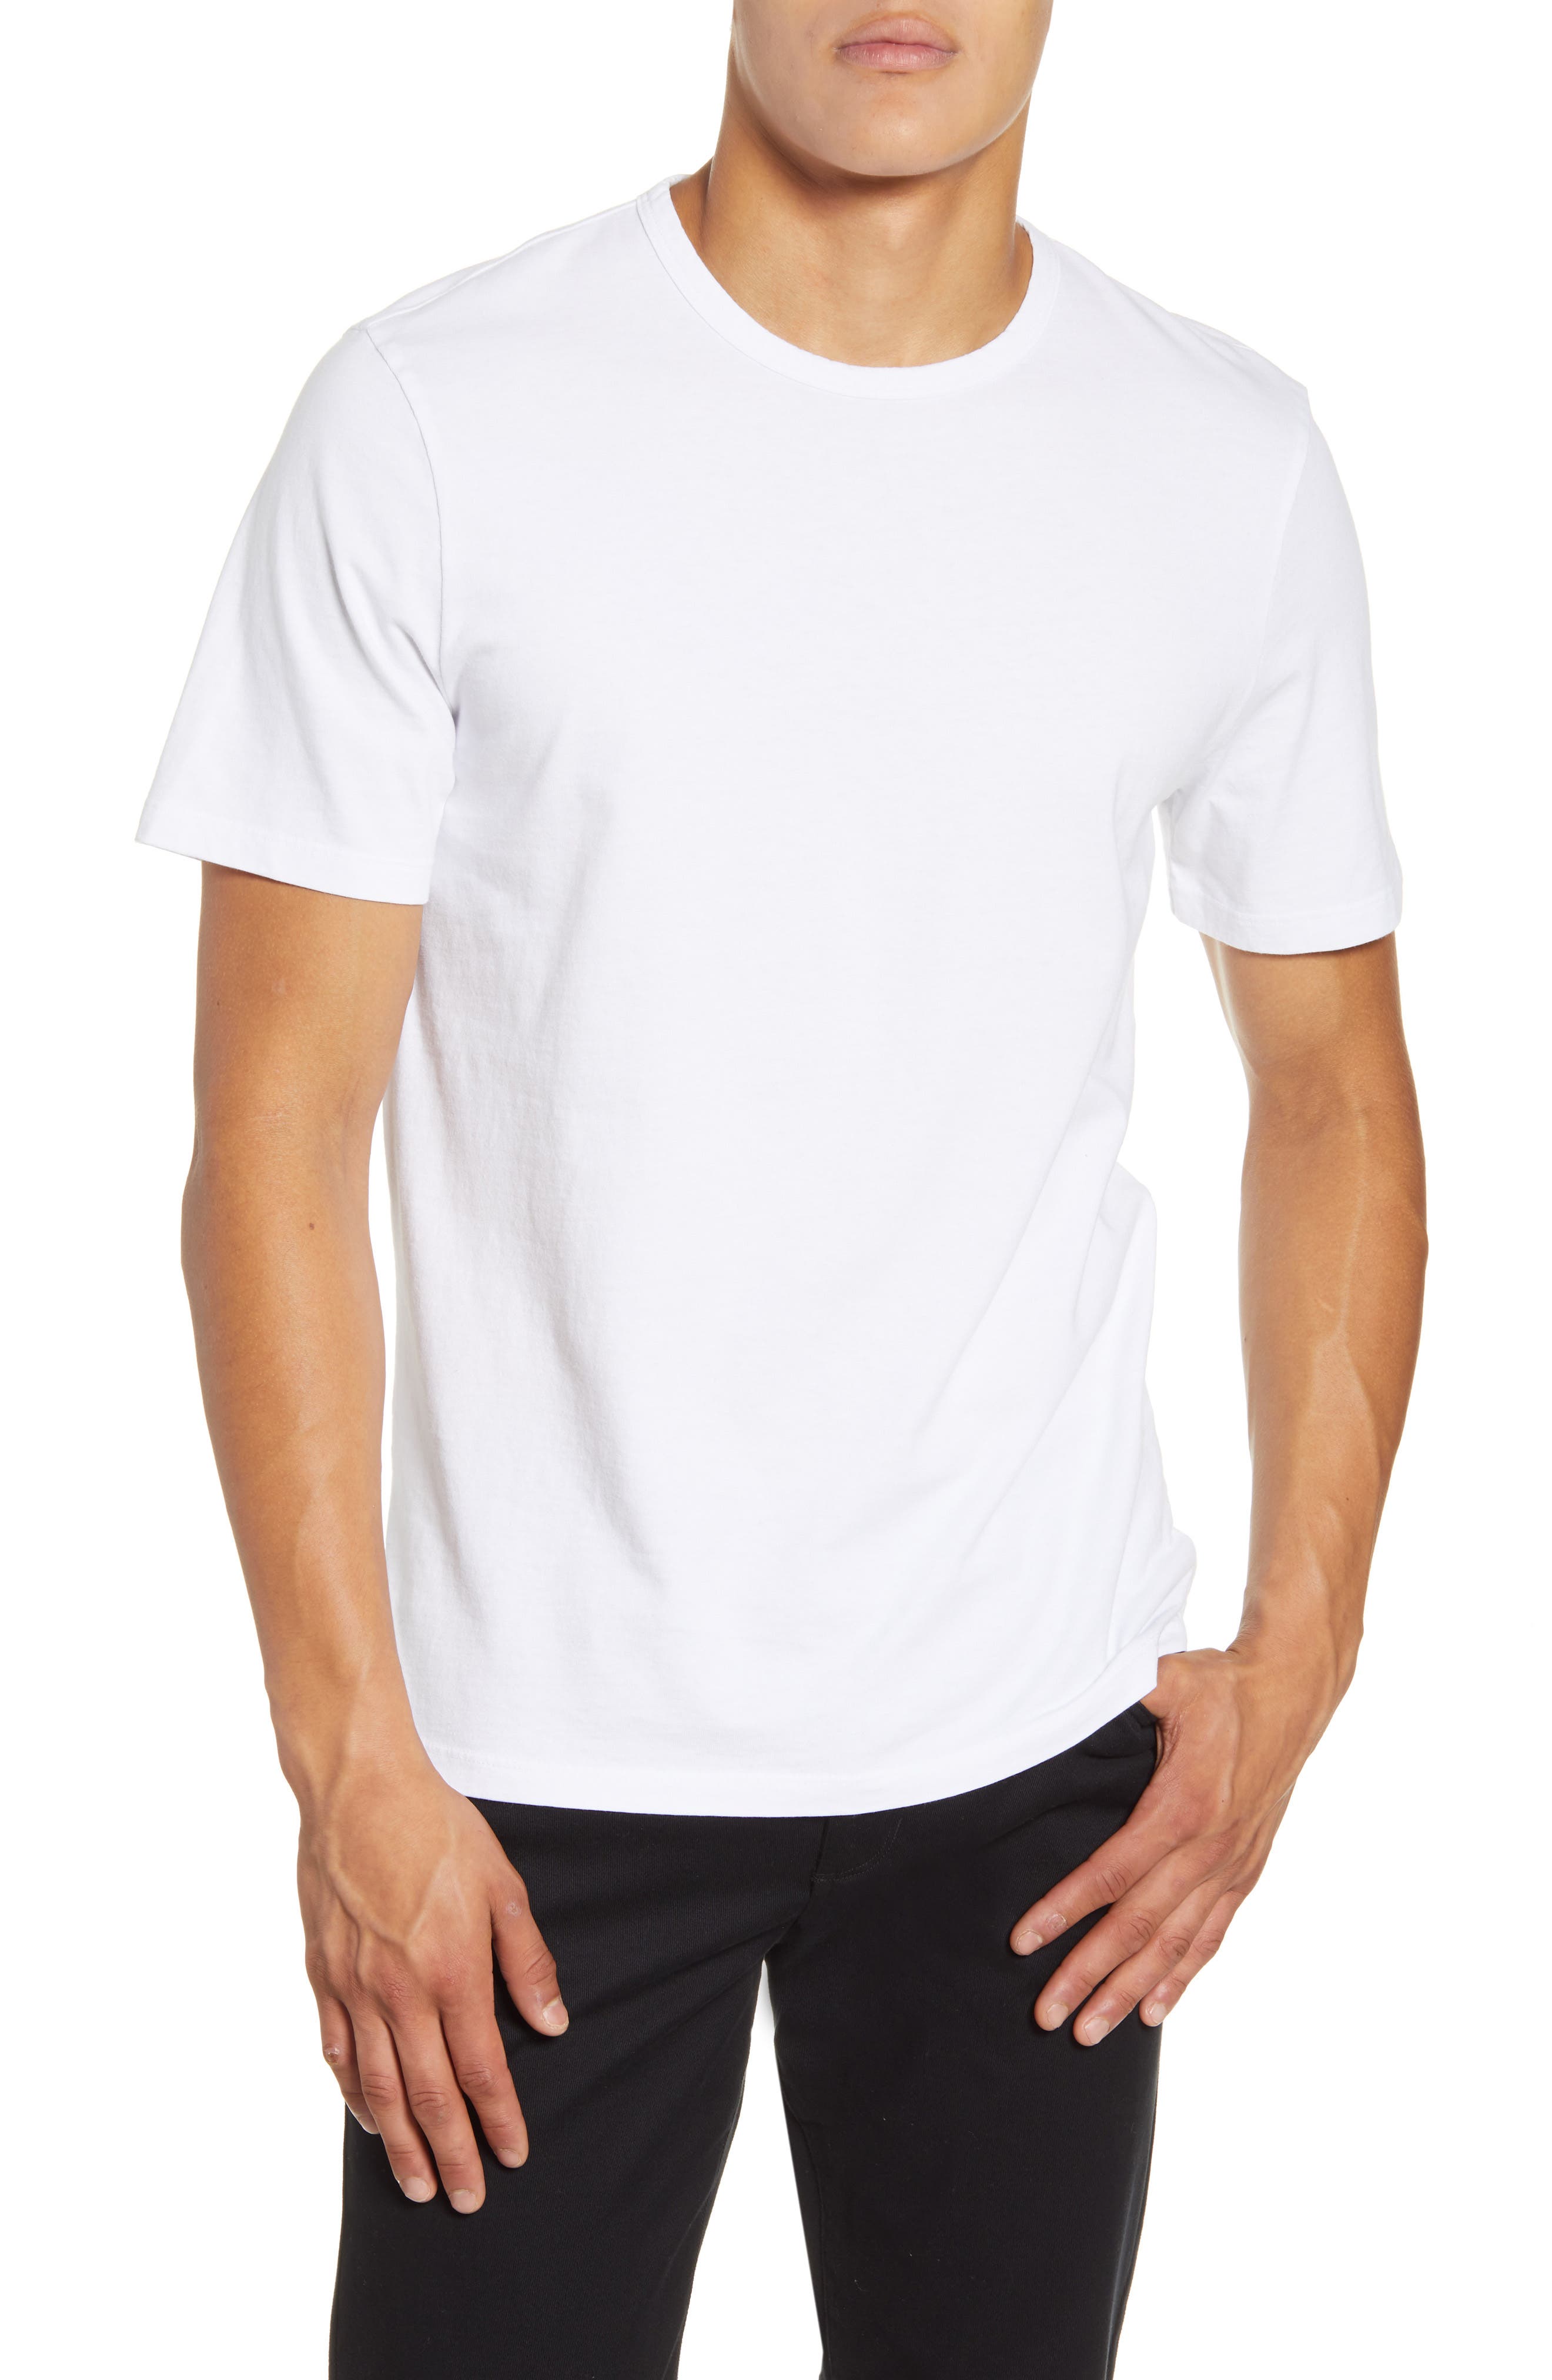 white t shirt for man